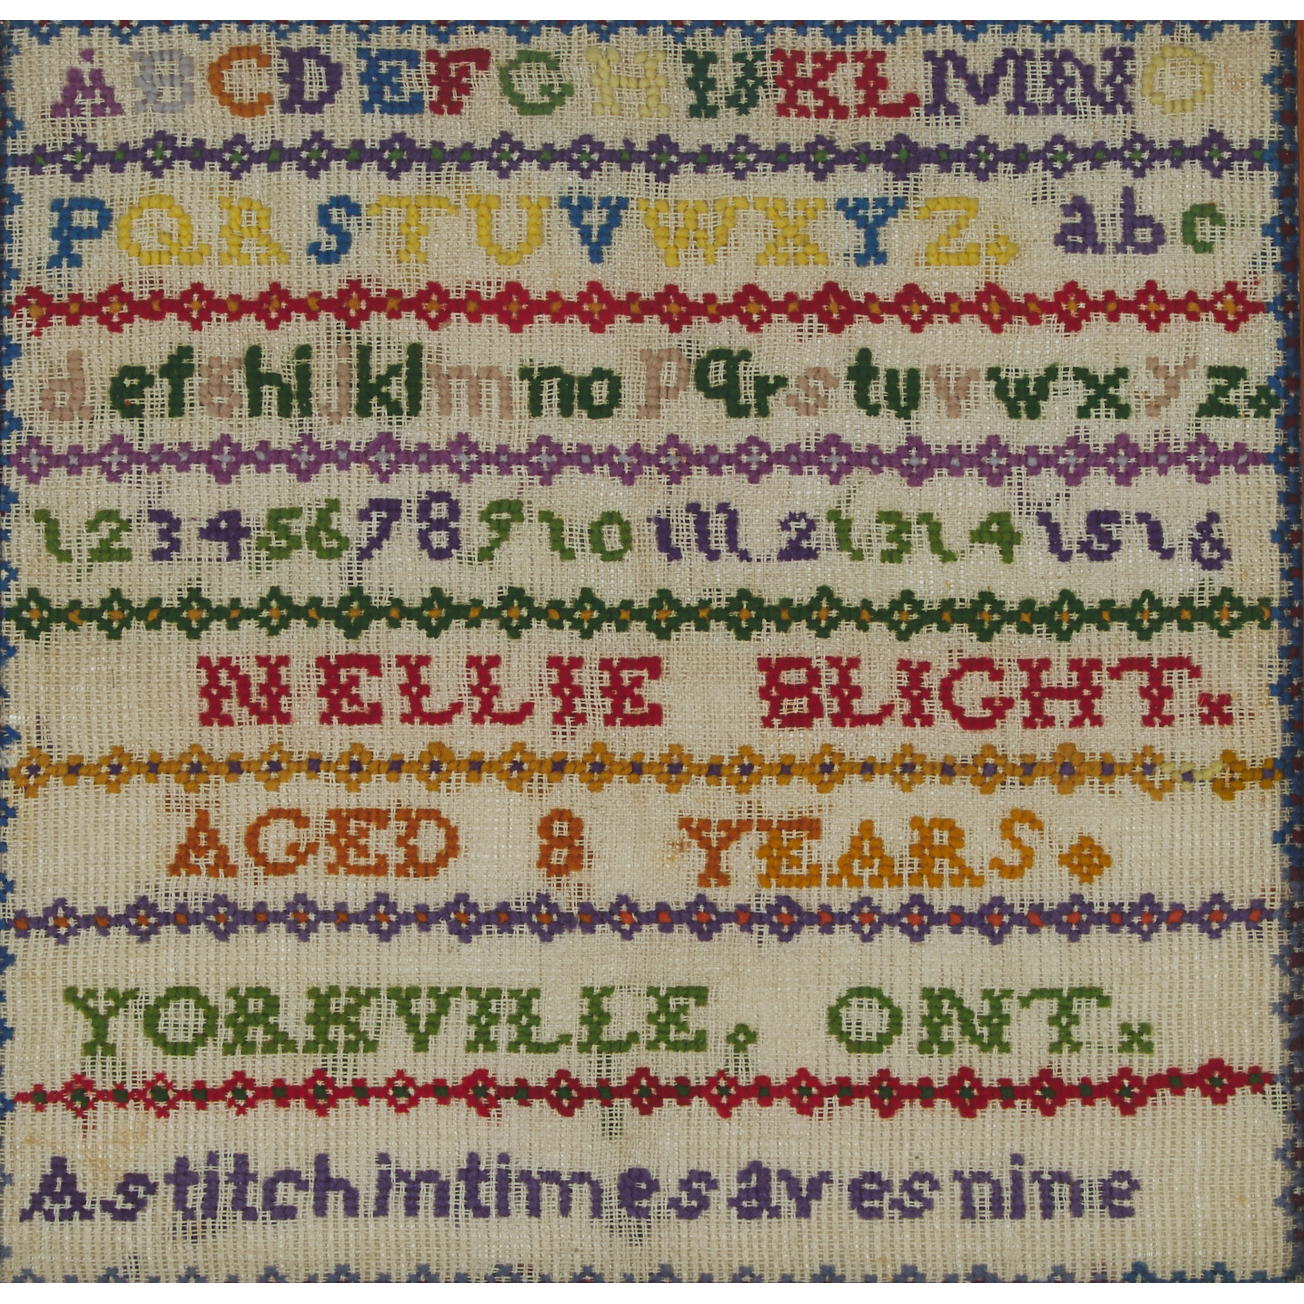 Ontario Alphabet Sampler with Motto, Nellie Blight, Yorkville, Ont., 19th century